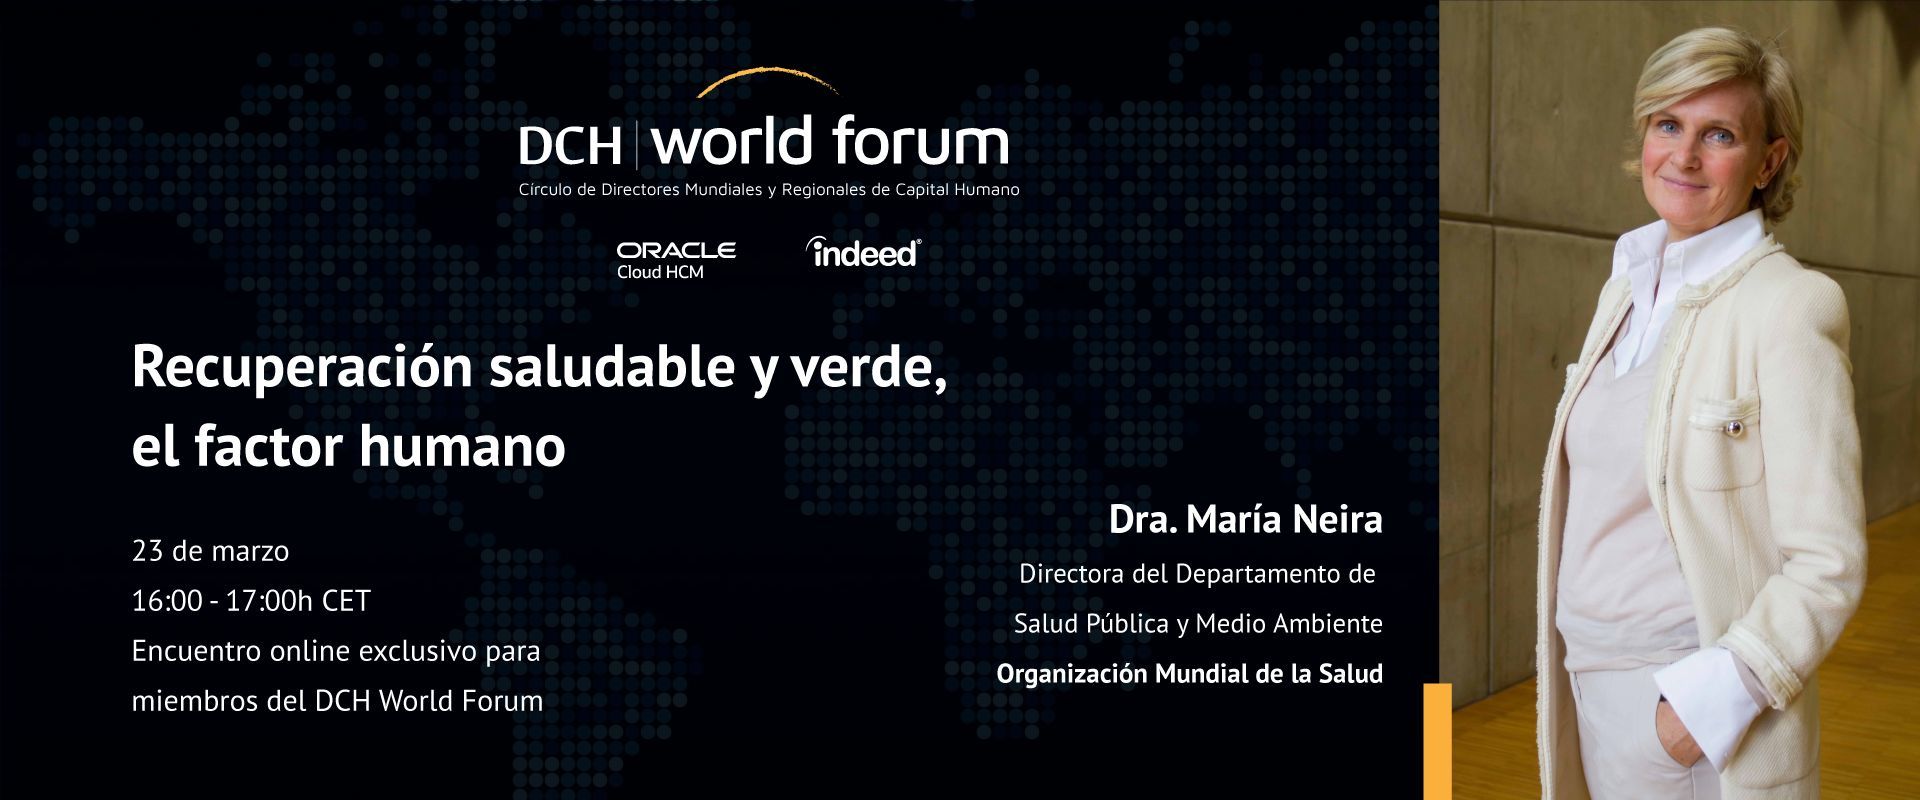 xadch world forum 1